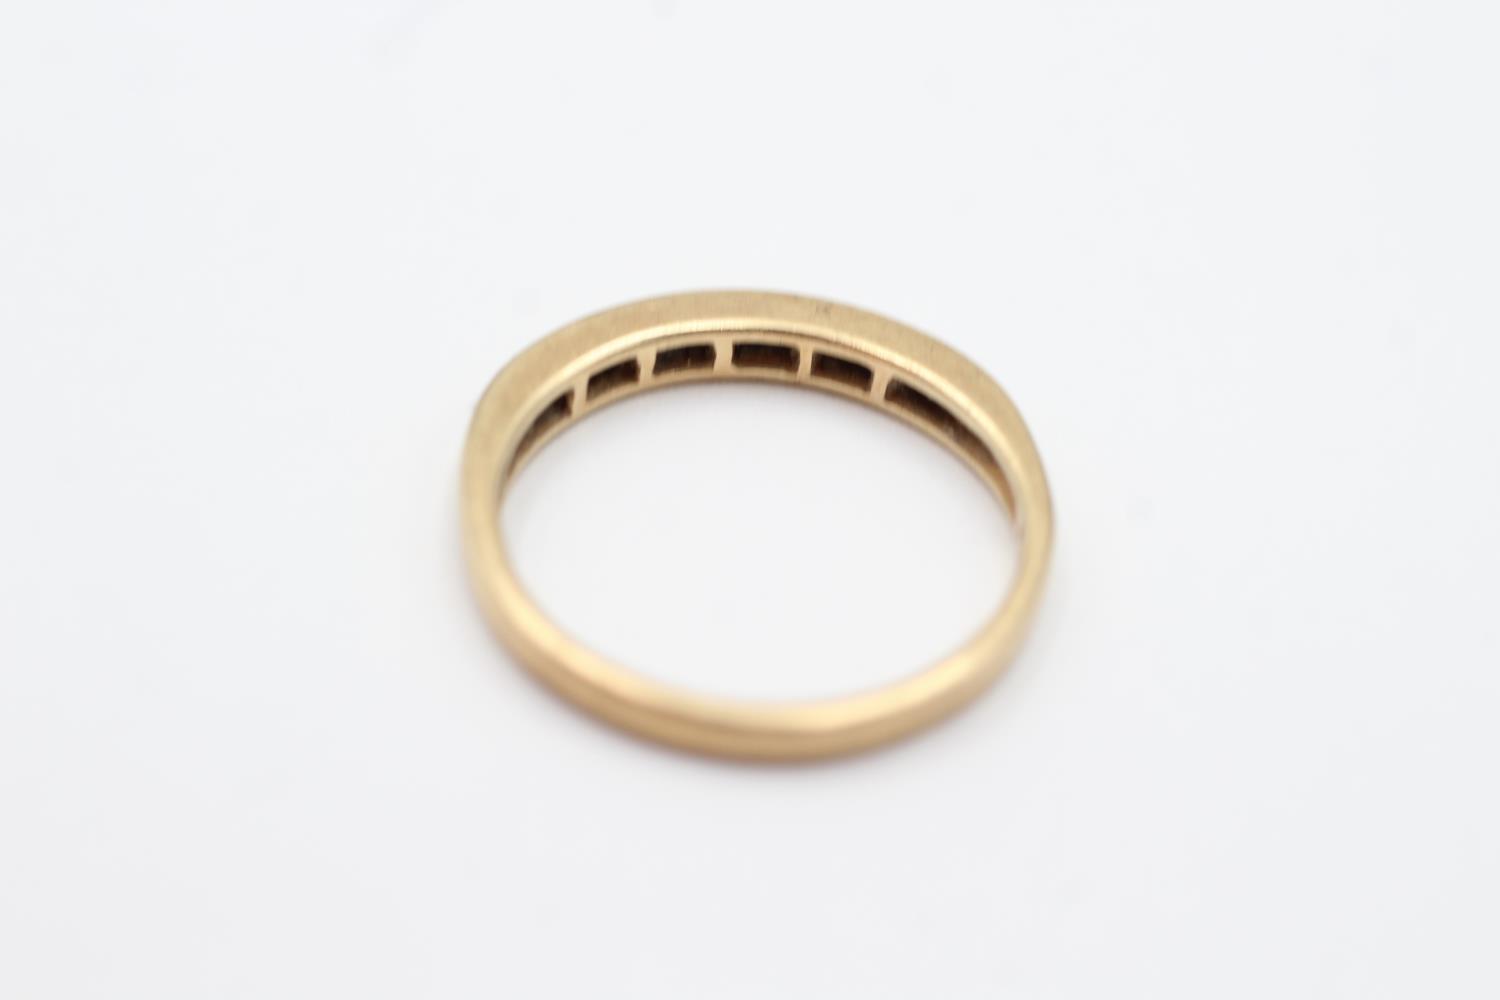 9ct gold diamond half eternity ring (1.6g) size M - Image 4 of 4